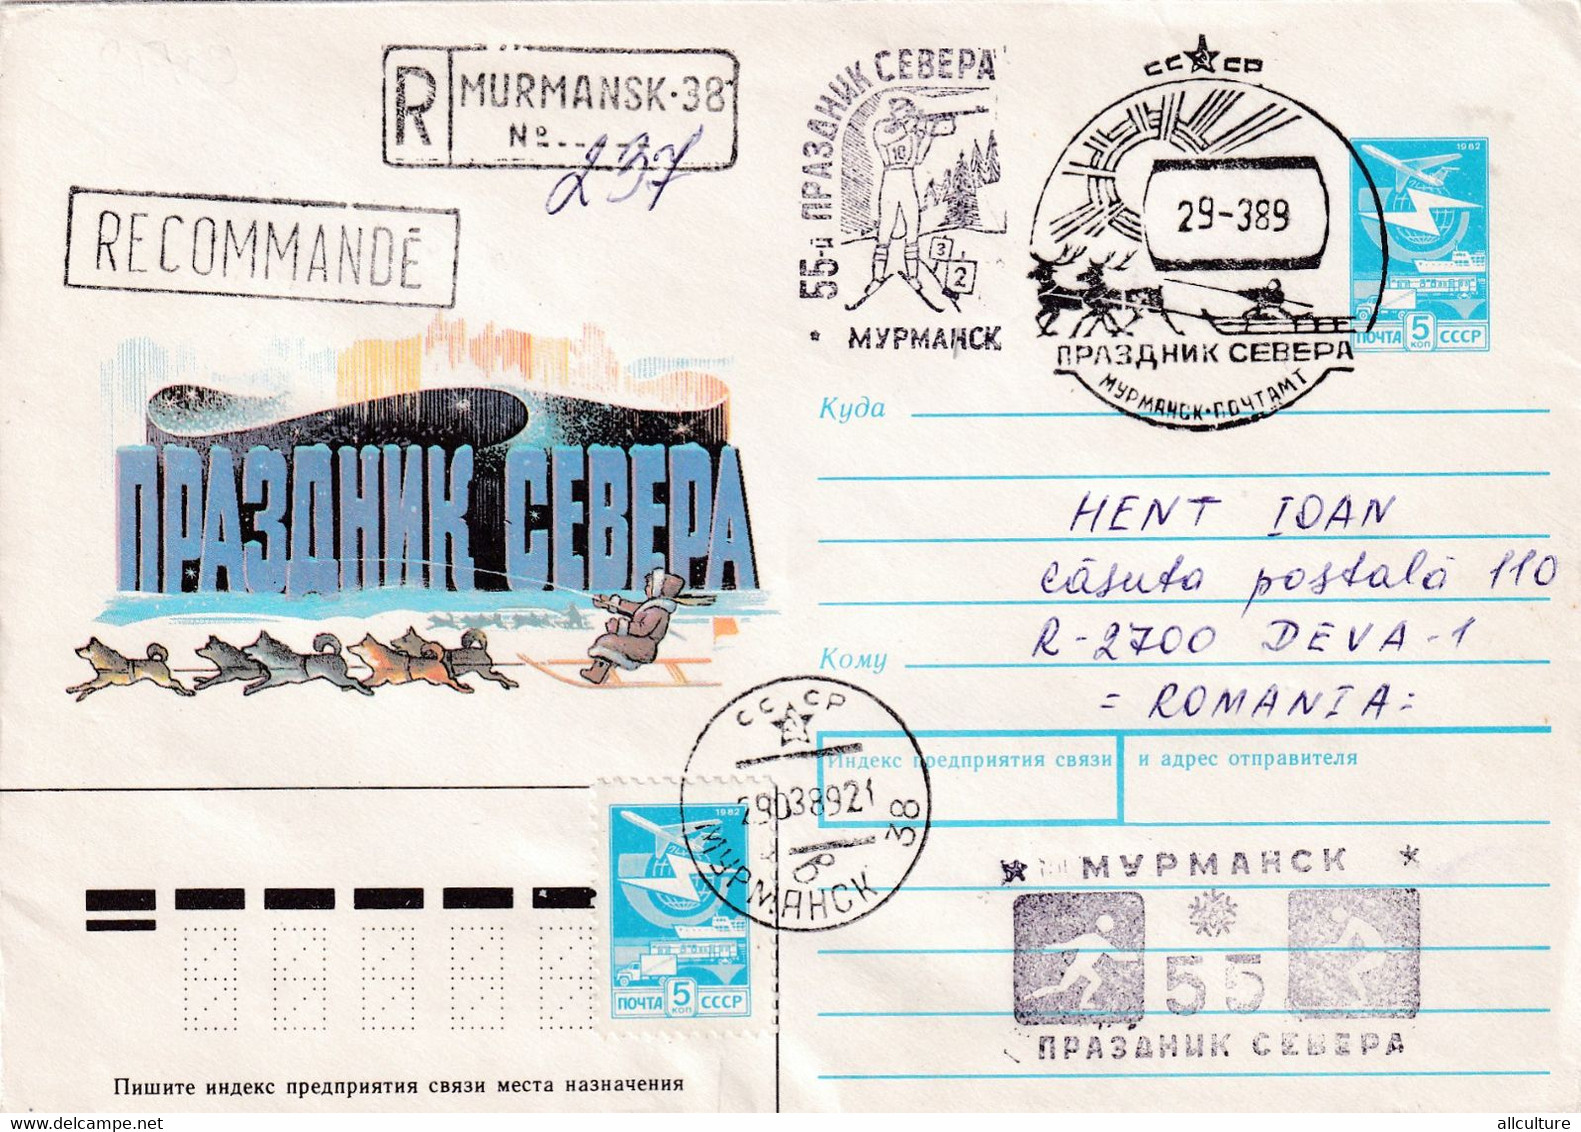 A8152- REGISTRED LETTER MURMANSK, HOLIDAY OF THE NORTH, 1989 USSR POSTAL STATIONERY SENT TO DEVA ROMANIA - Evenementen & Herdenkingen